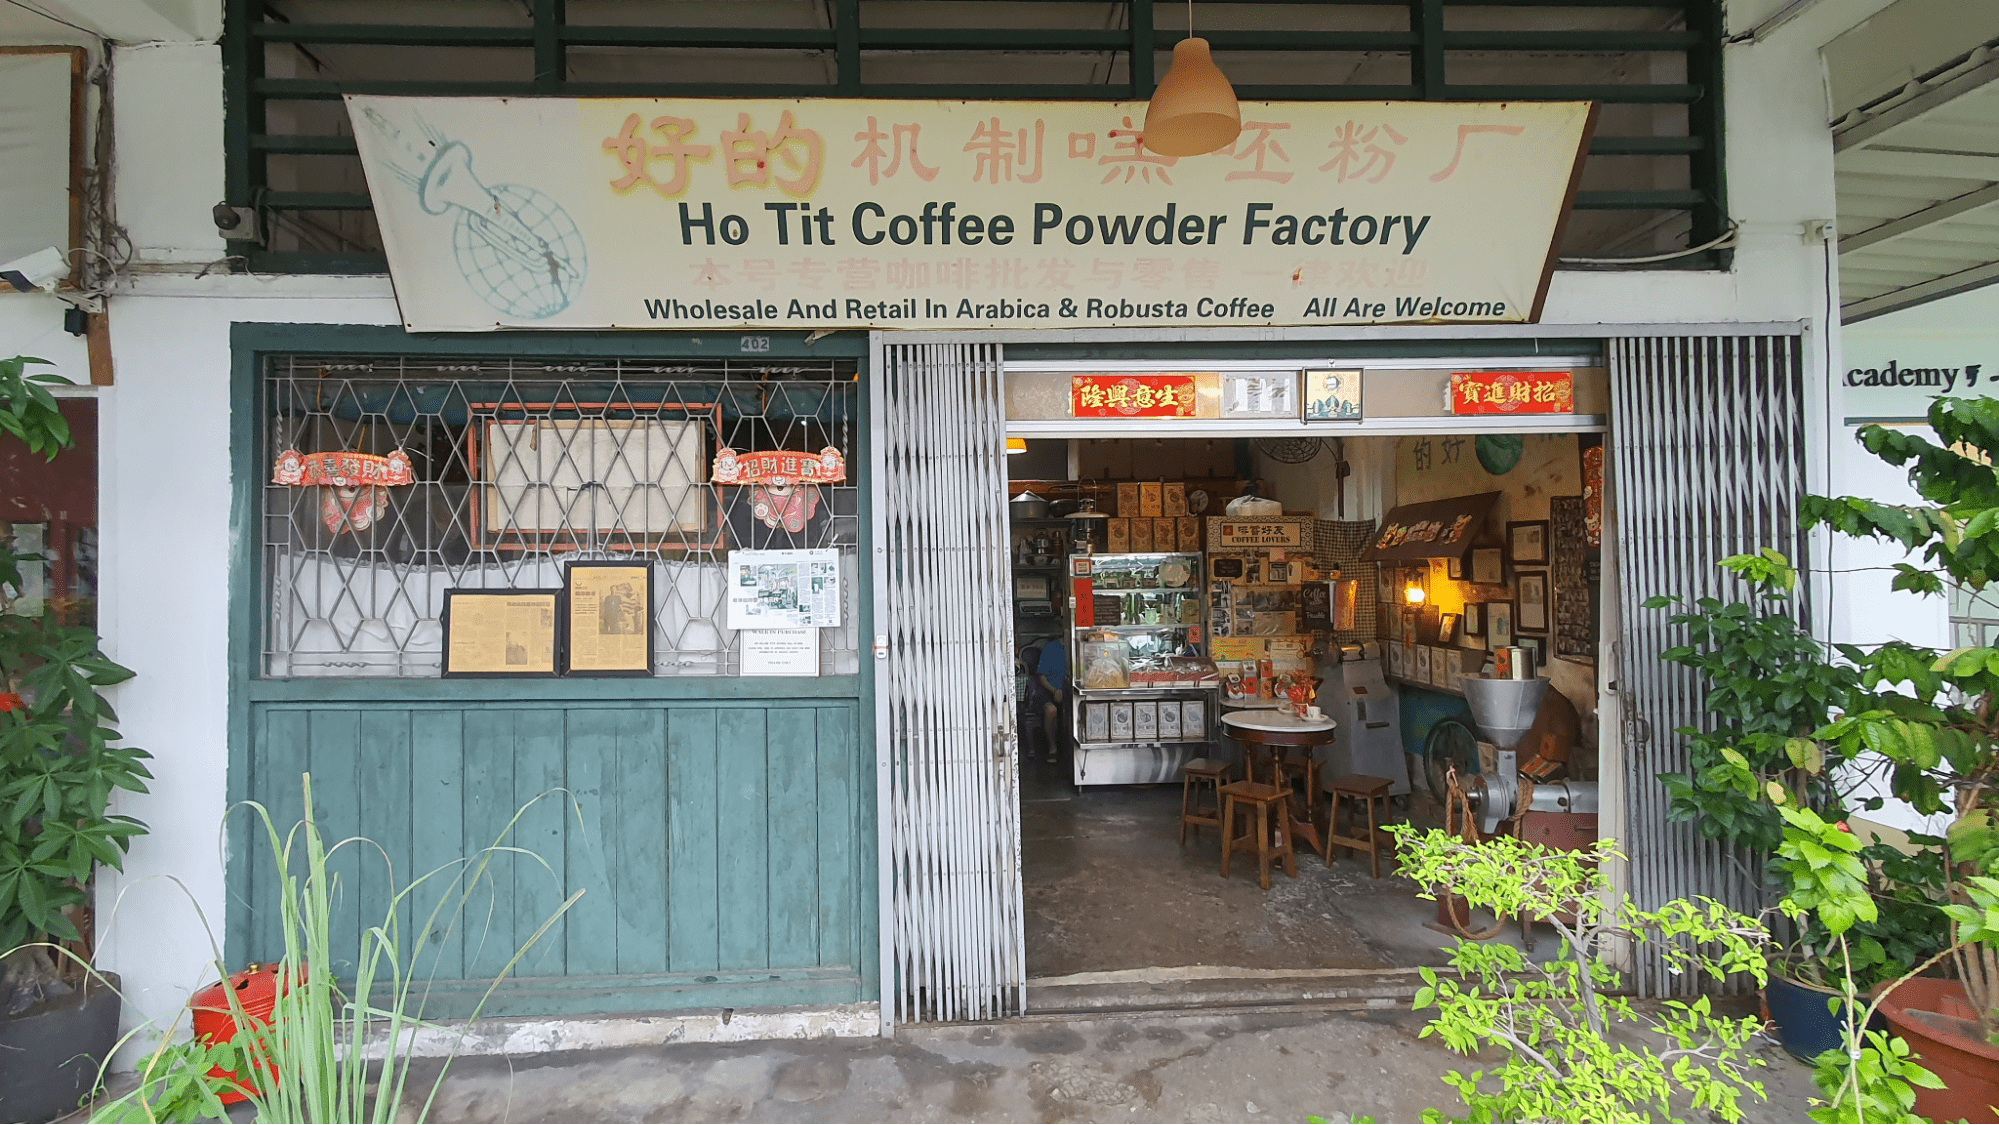 Ho Tit Coffee Powder Factory entrance 